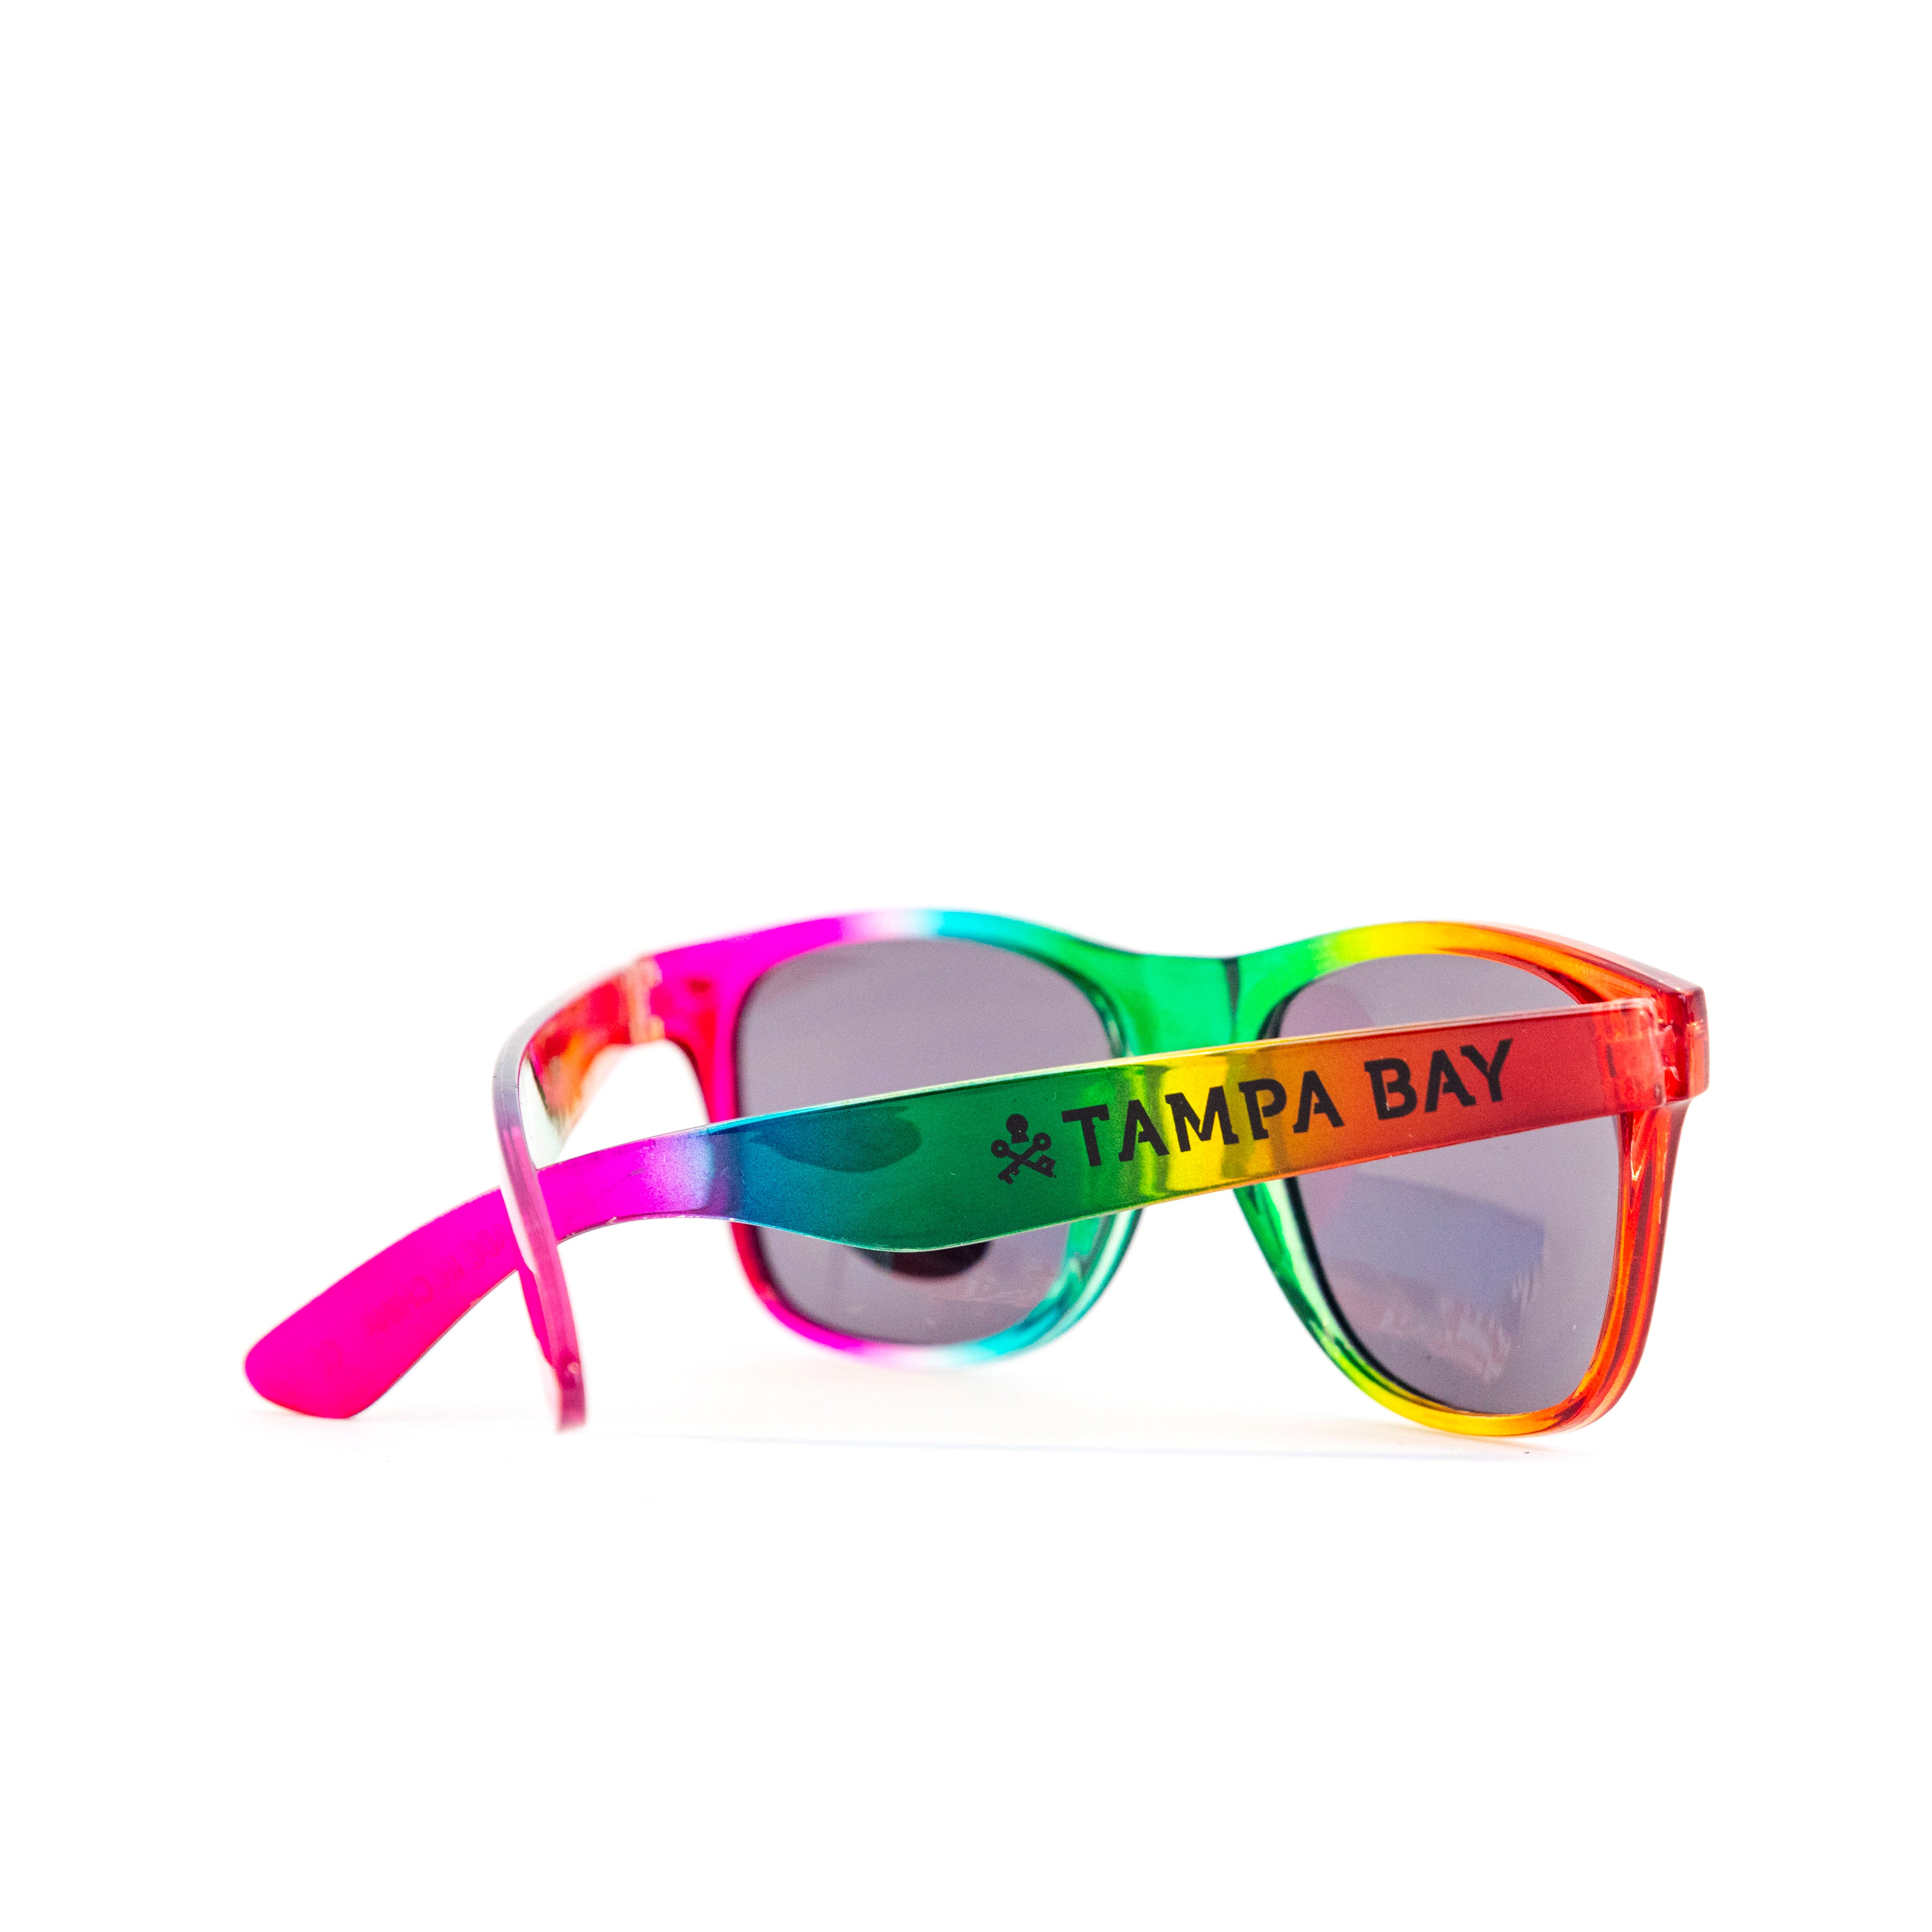 Tampa Bay Pride Rainbow Sunglasses